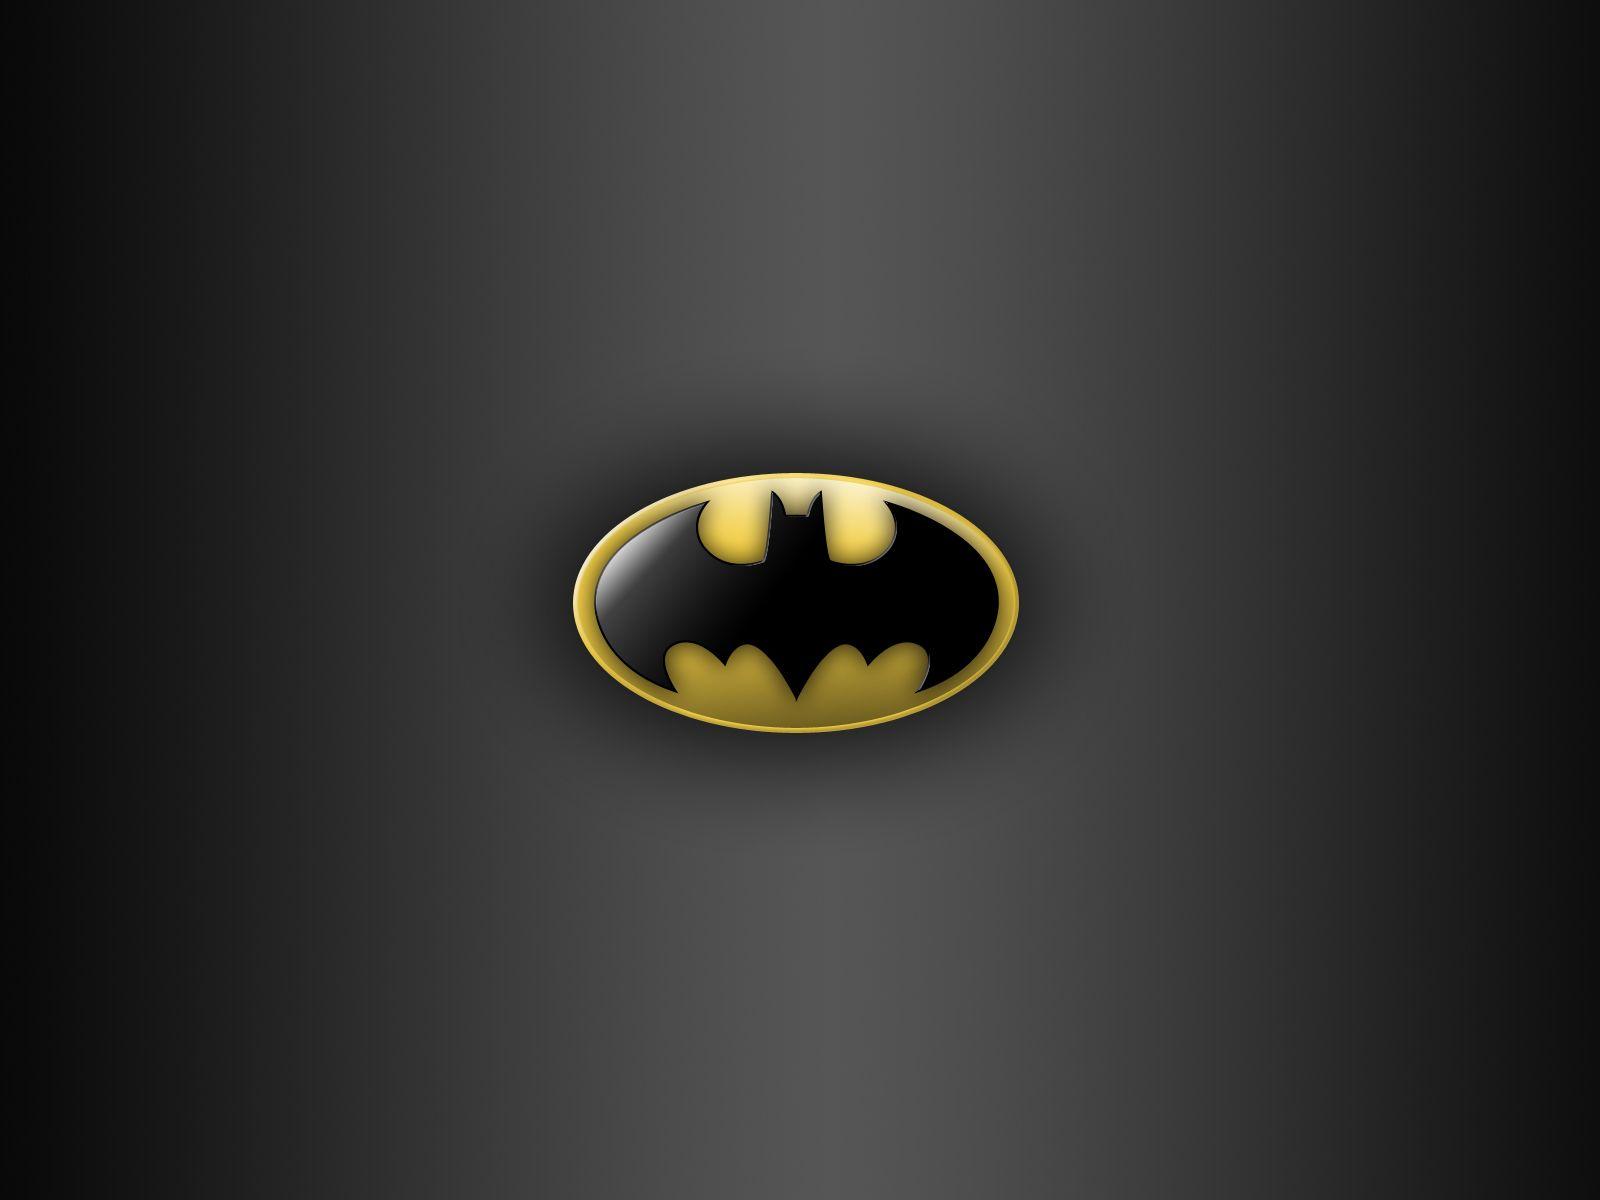 Batman Logo Wallpaper For Mobileêt à taux zéro